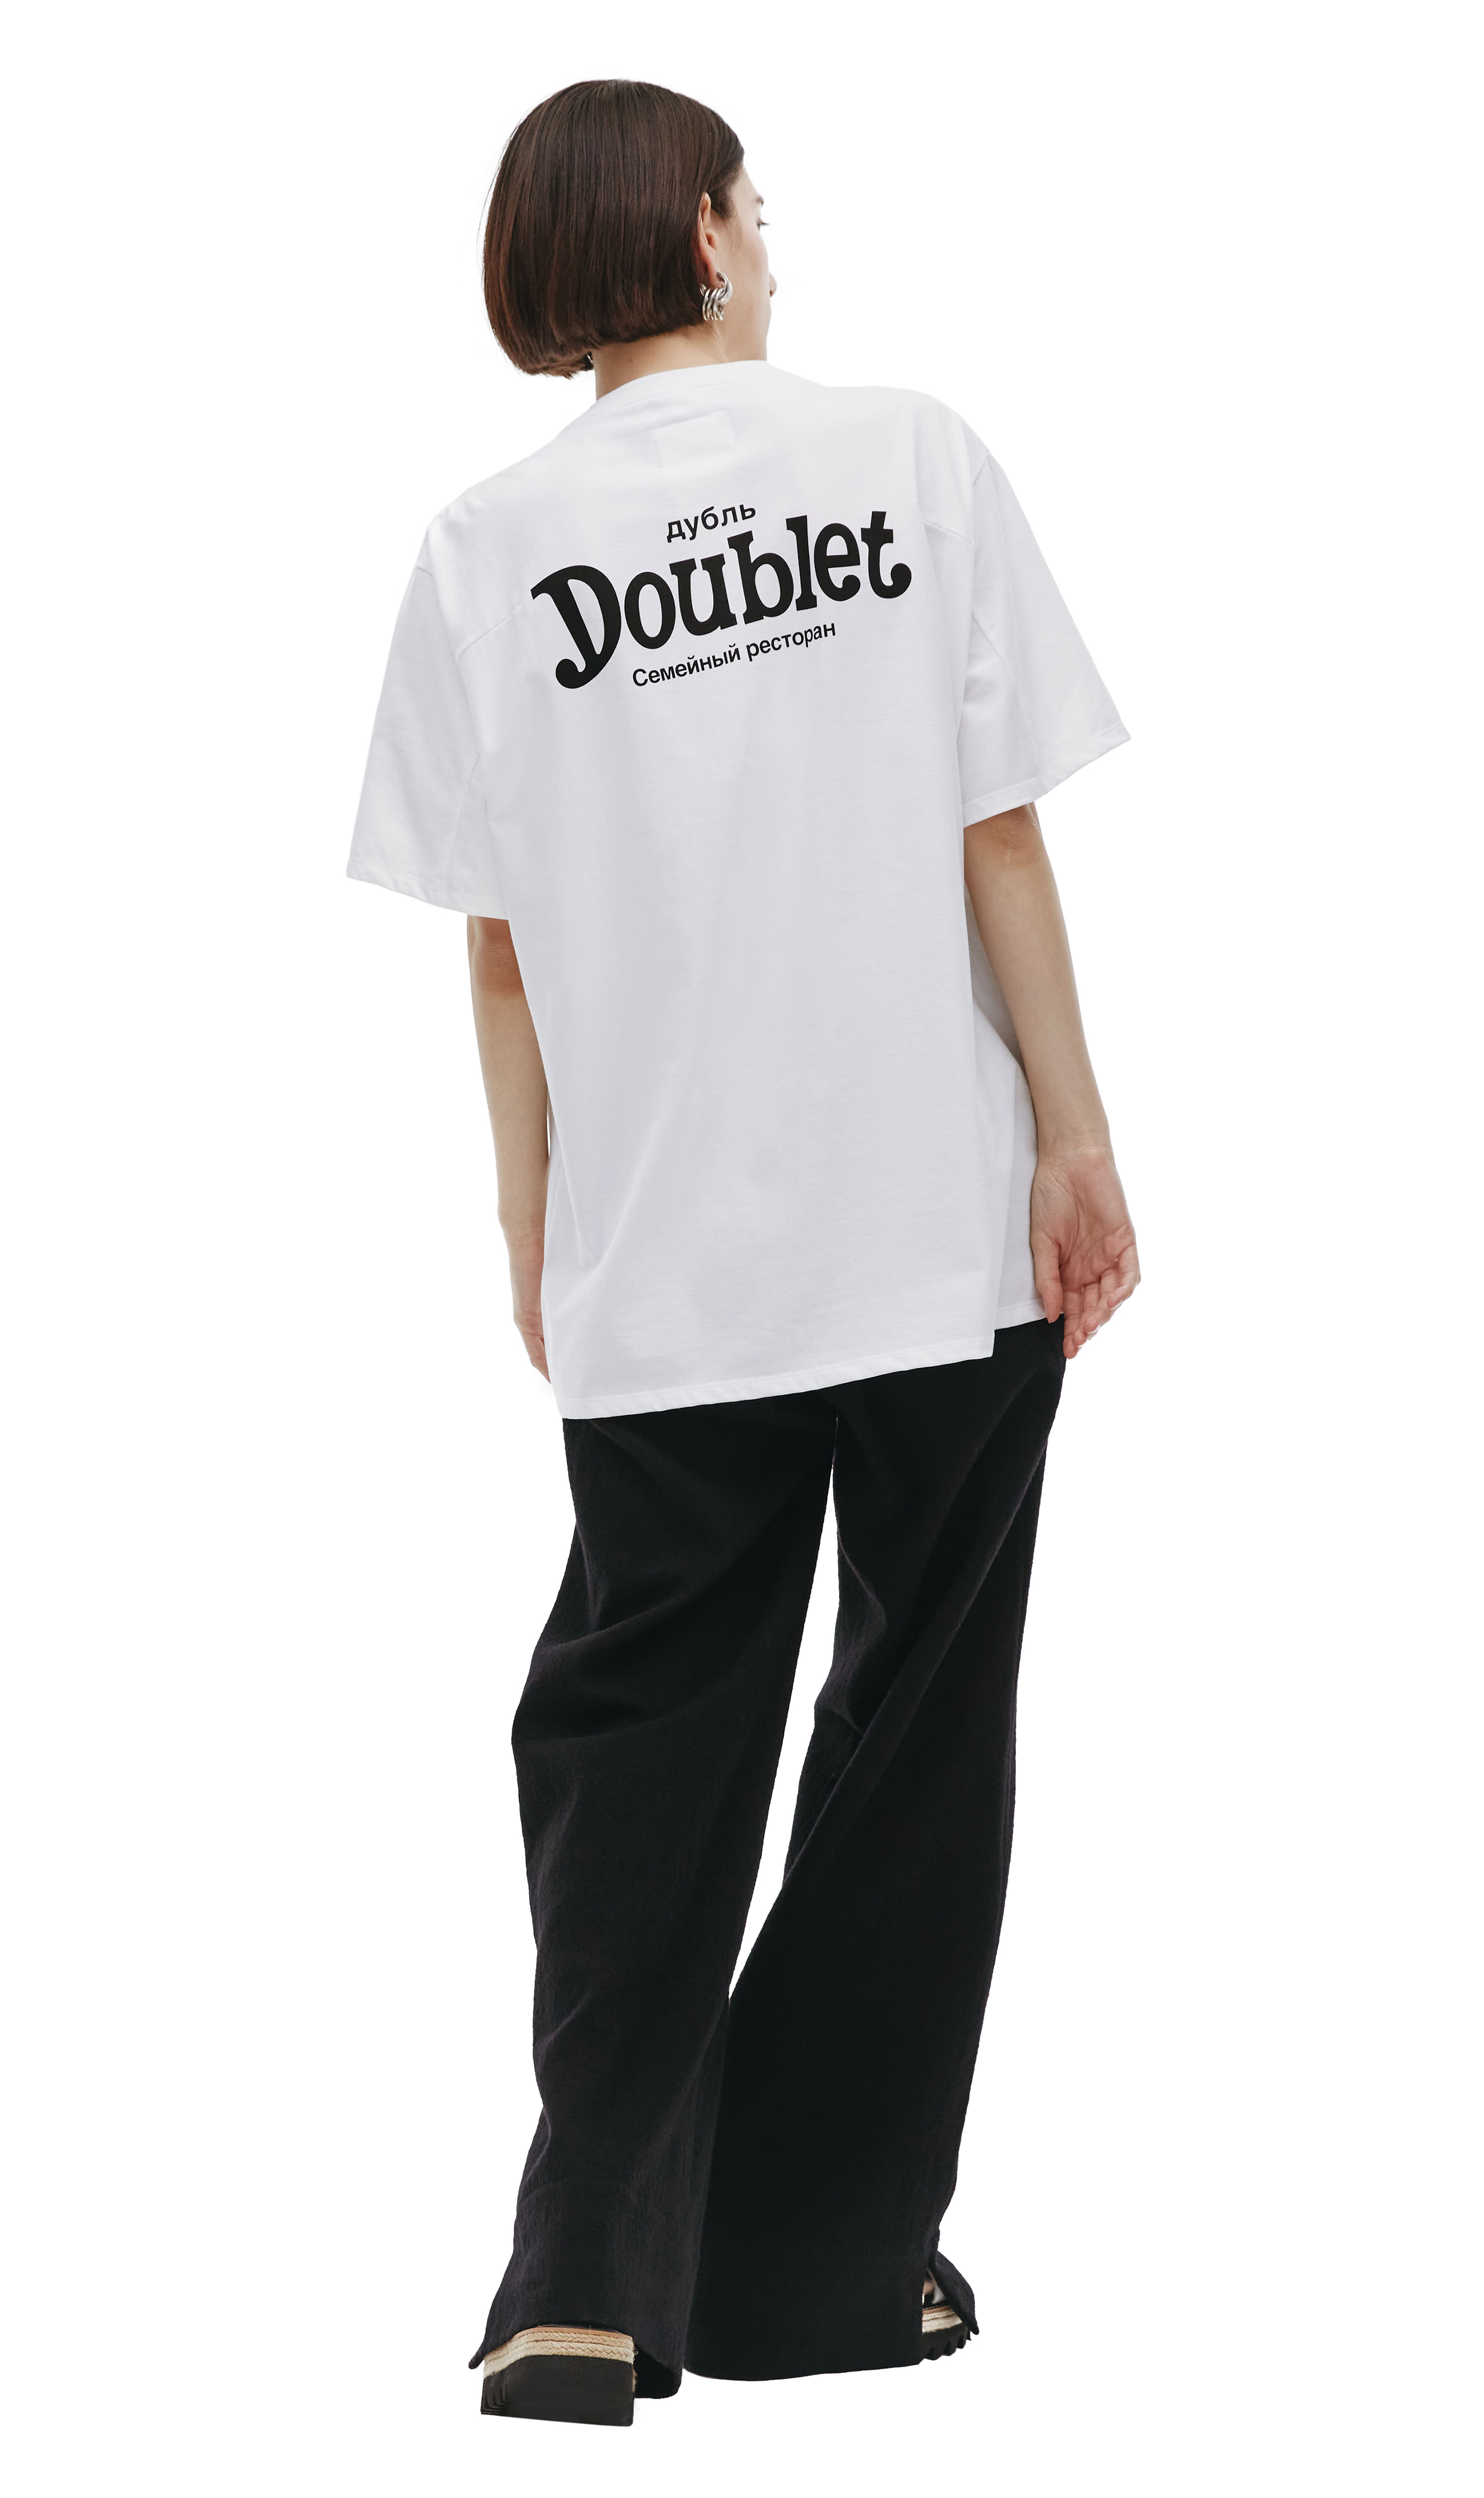 Buy Doublet women white doublet x sv t-shirt for $445 online on 